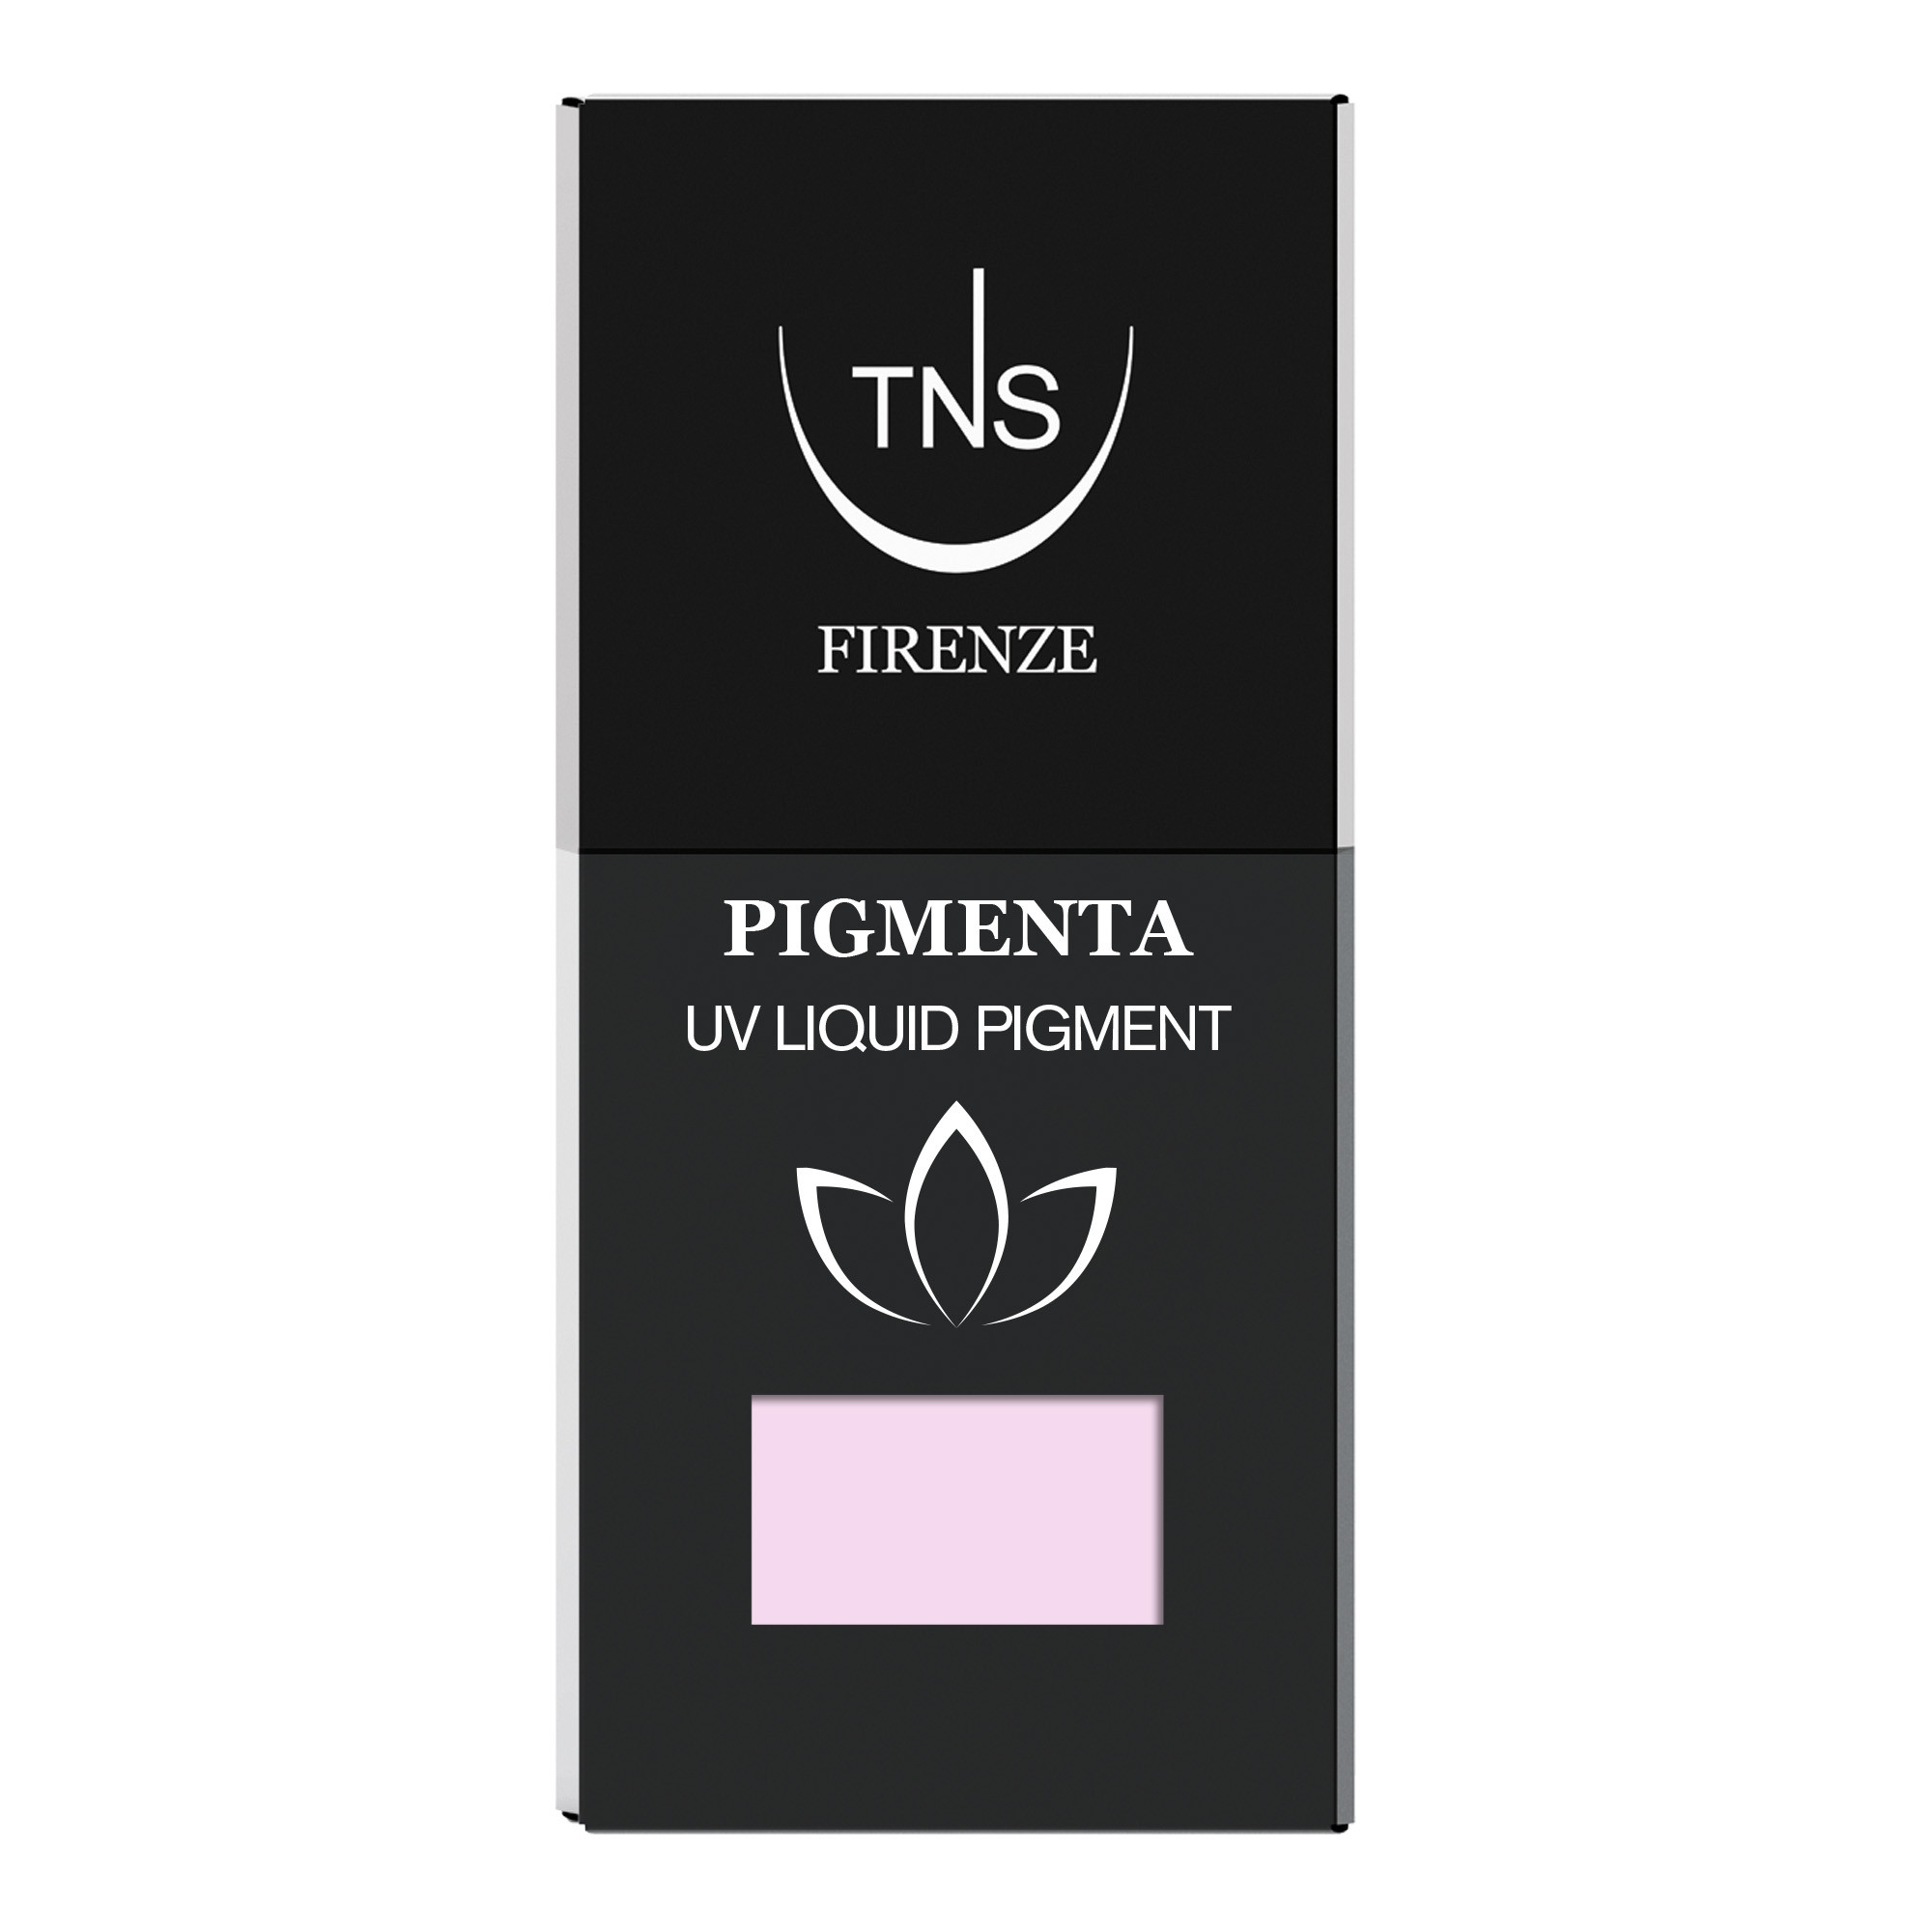 UV Flüssigpigment Vanity Pink 10 ml Pigmenta TNS